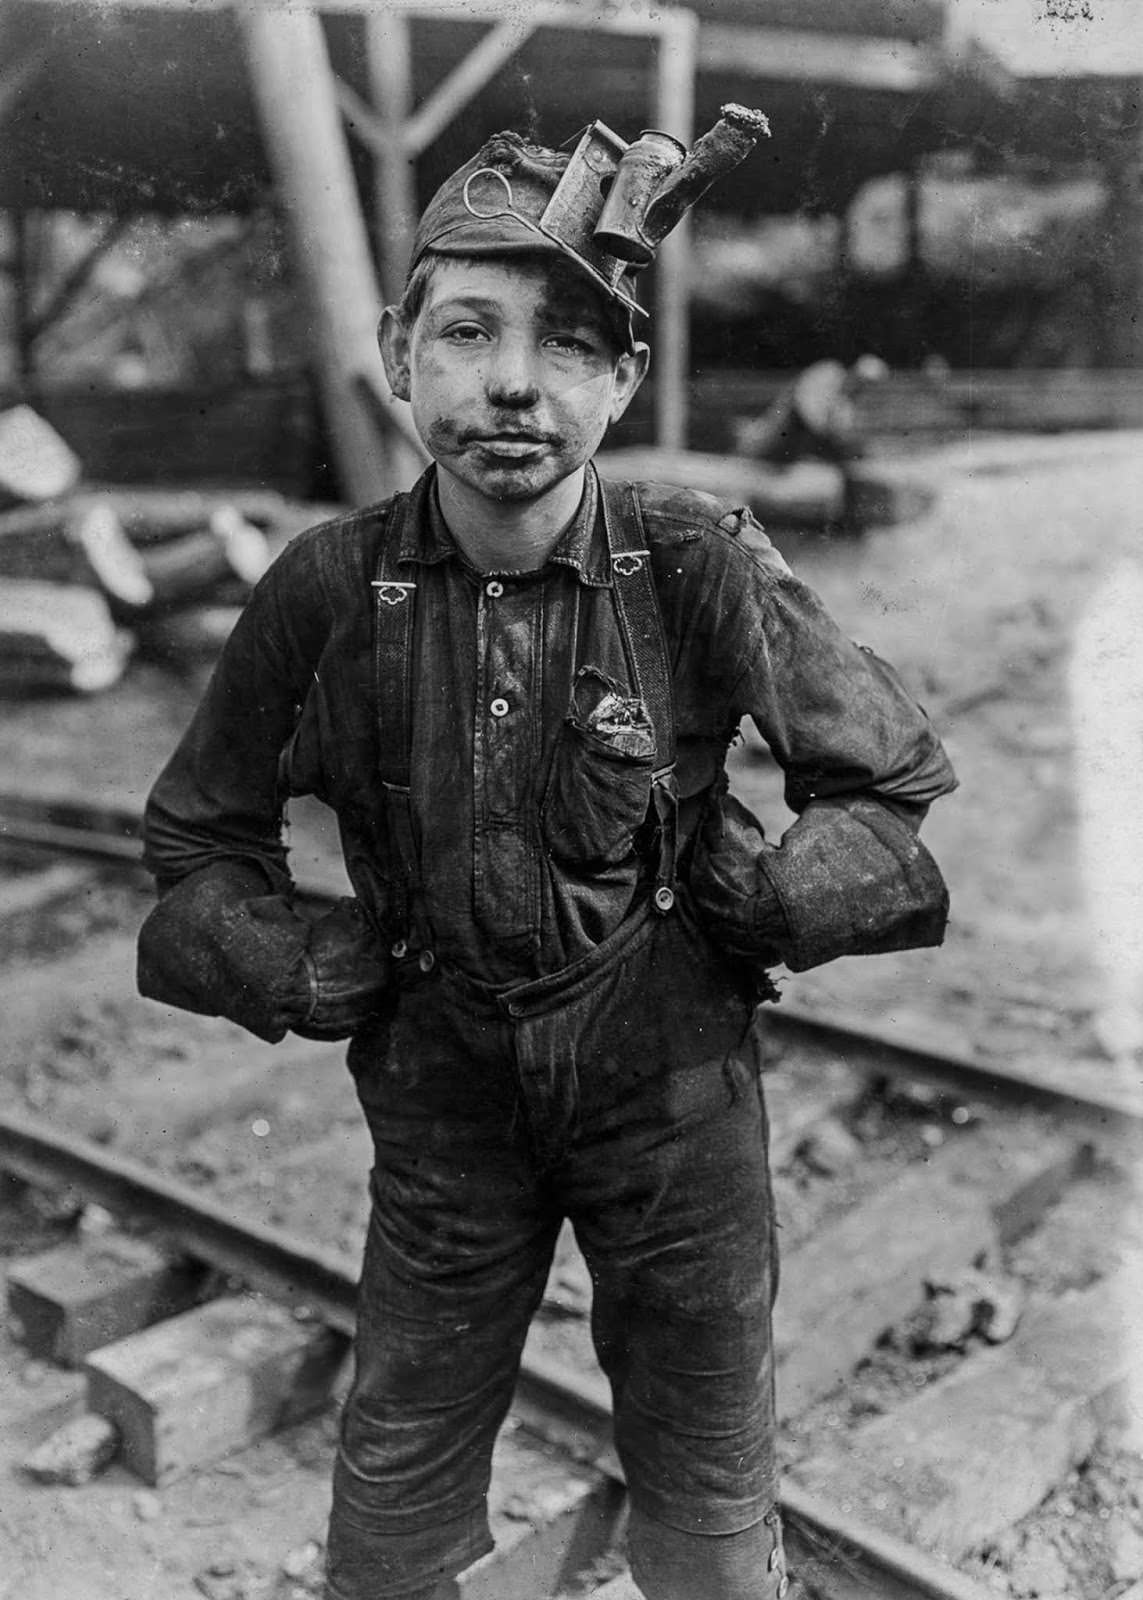 A tipple boy at Turkey Knob Mine in Macdonald, West Virginia, 1908